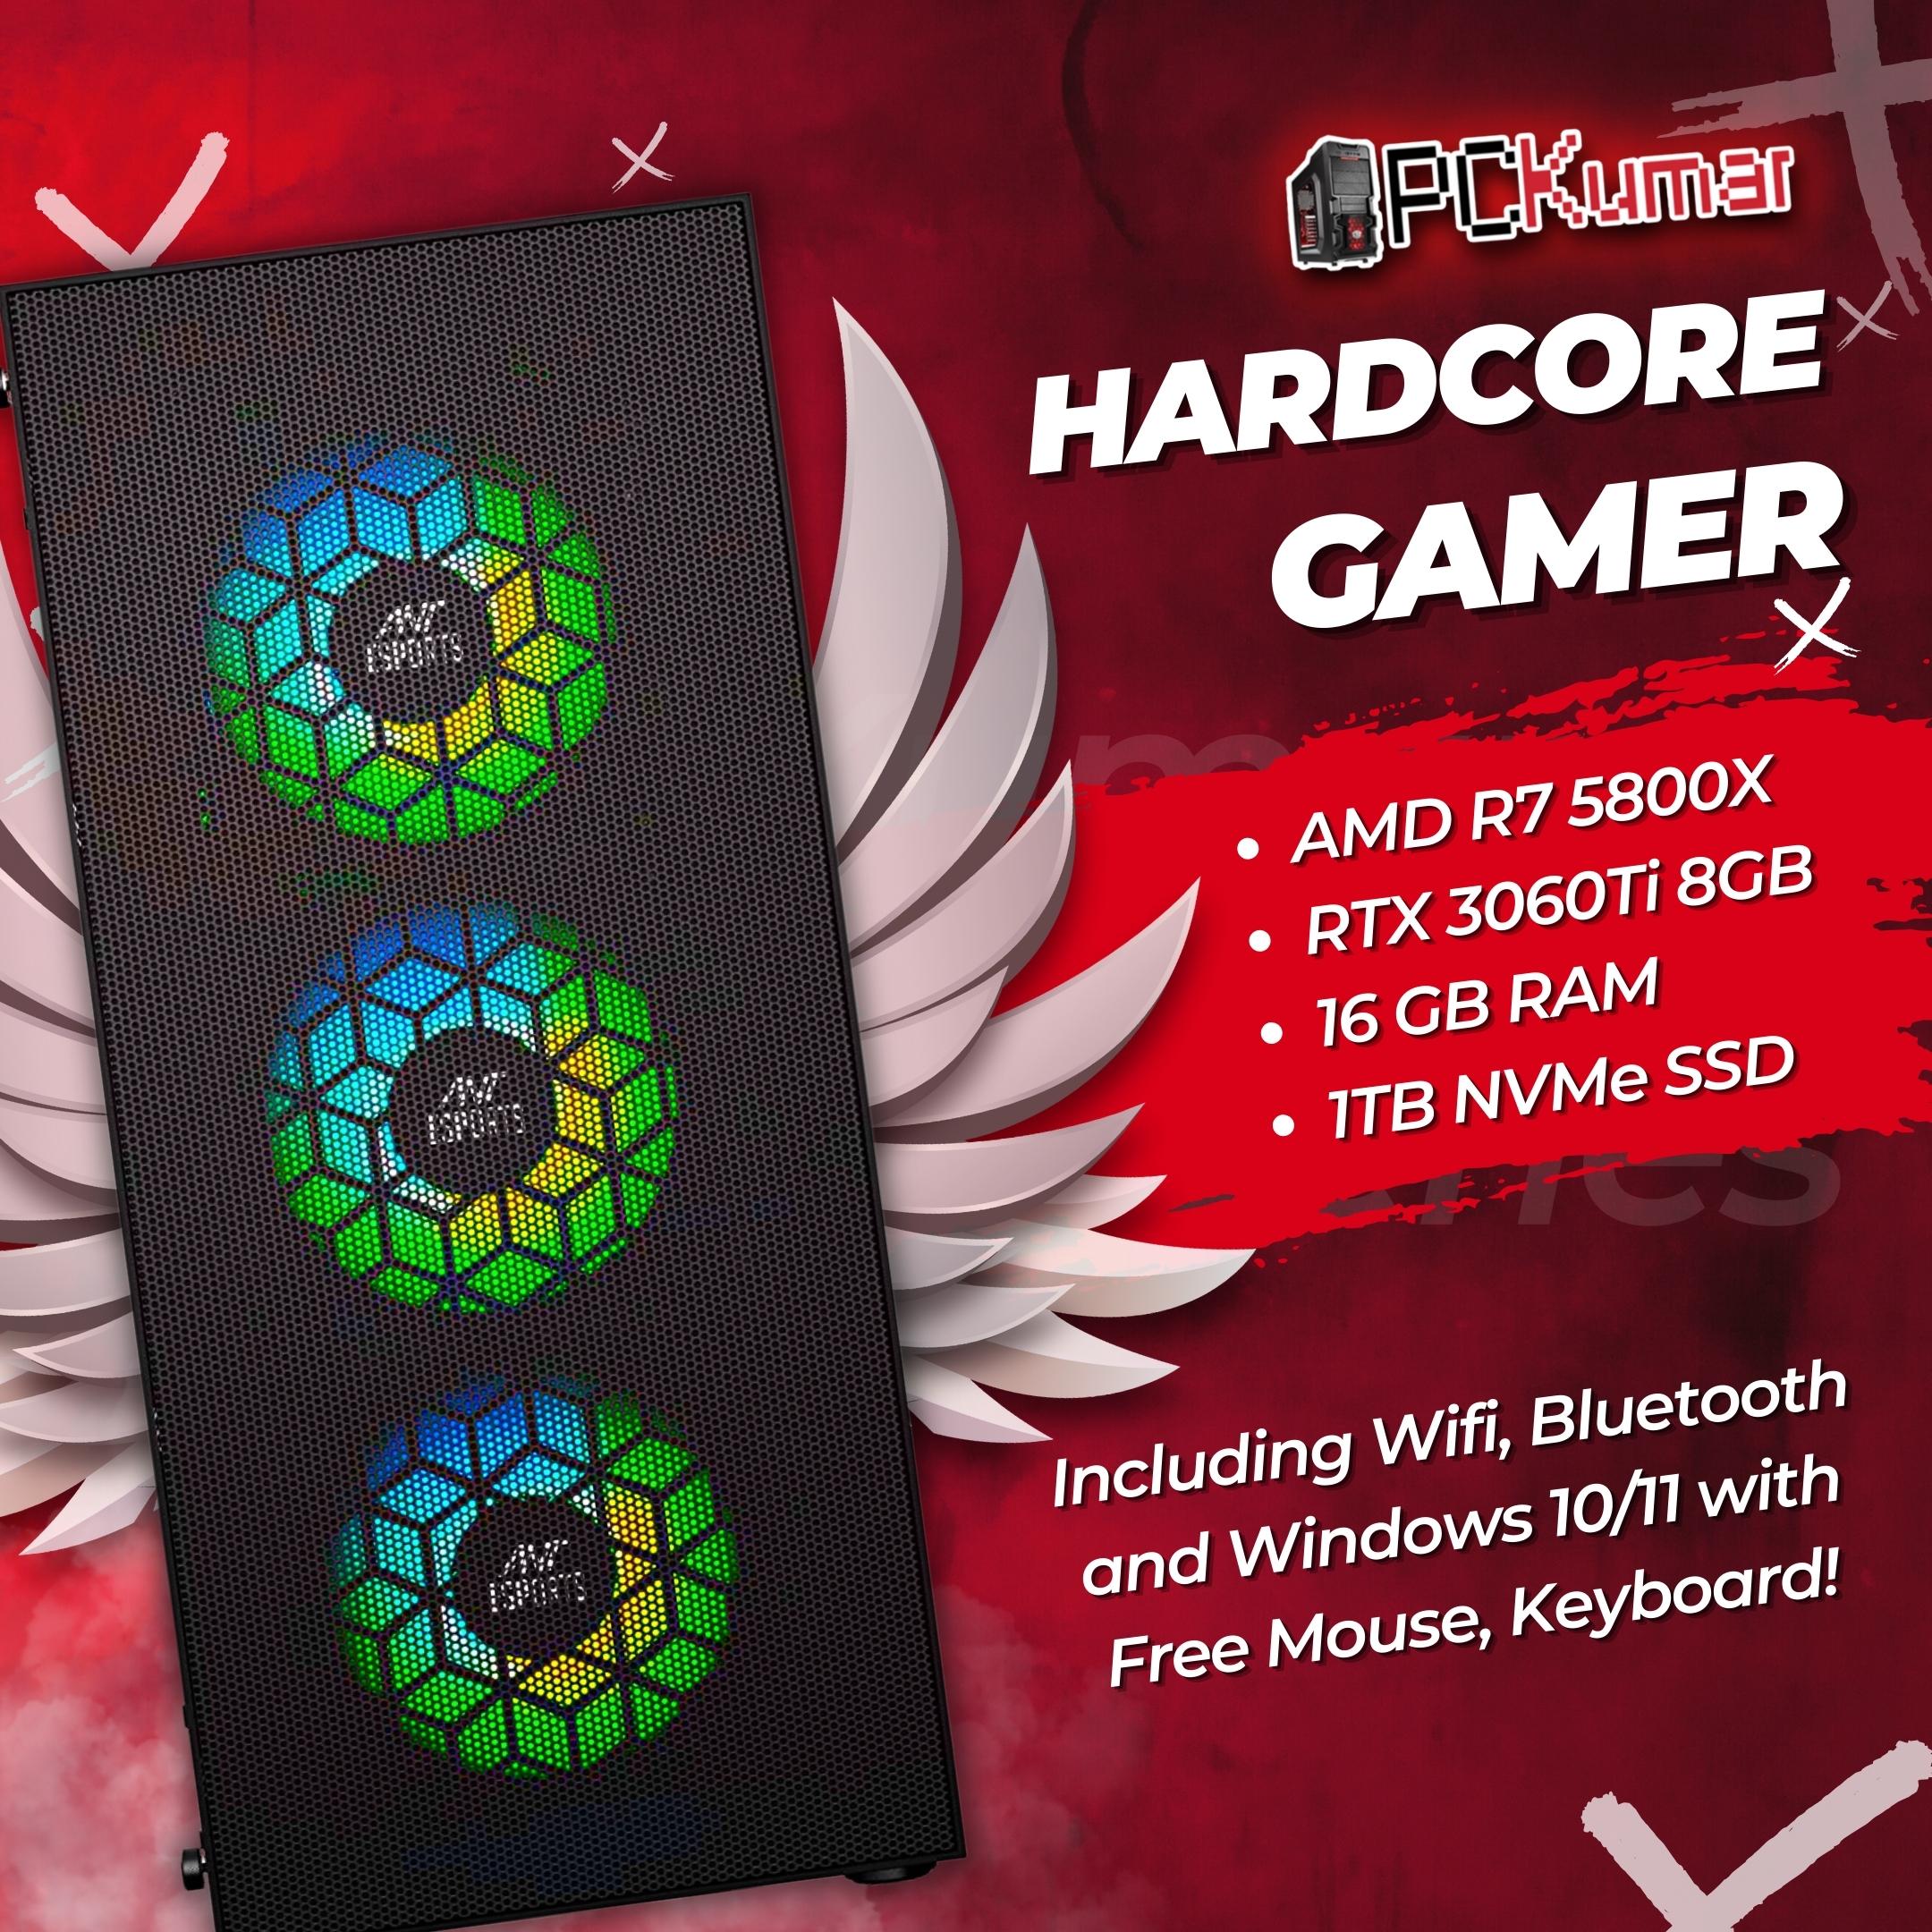 Hardcore Gamer with AMD Ryzen 7 5800X + RTX 3060Ti